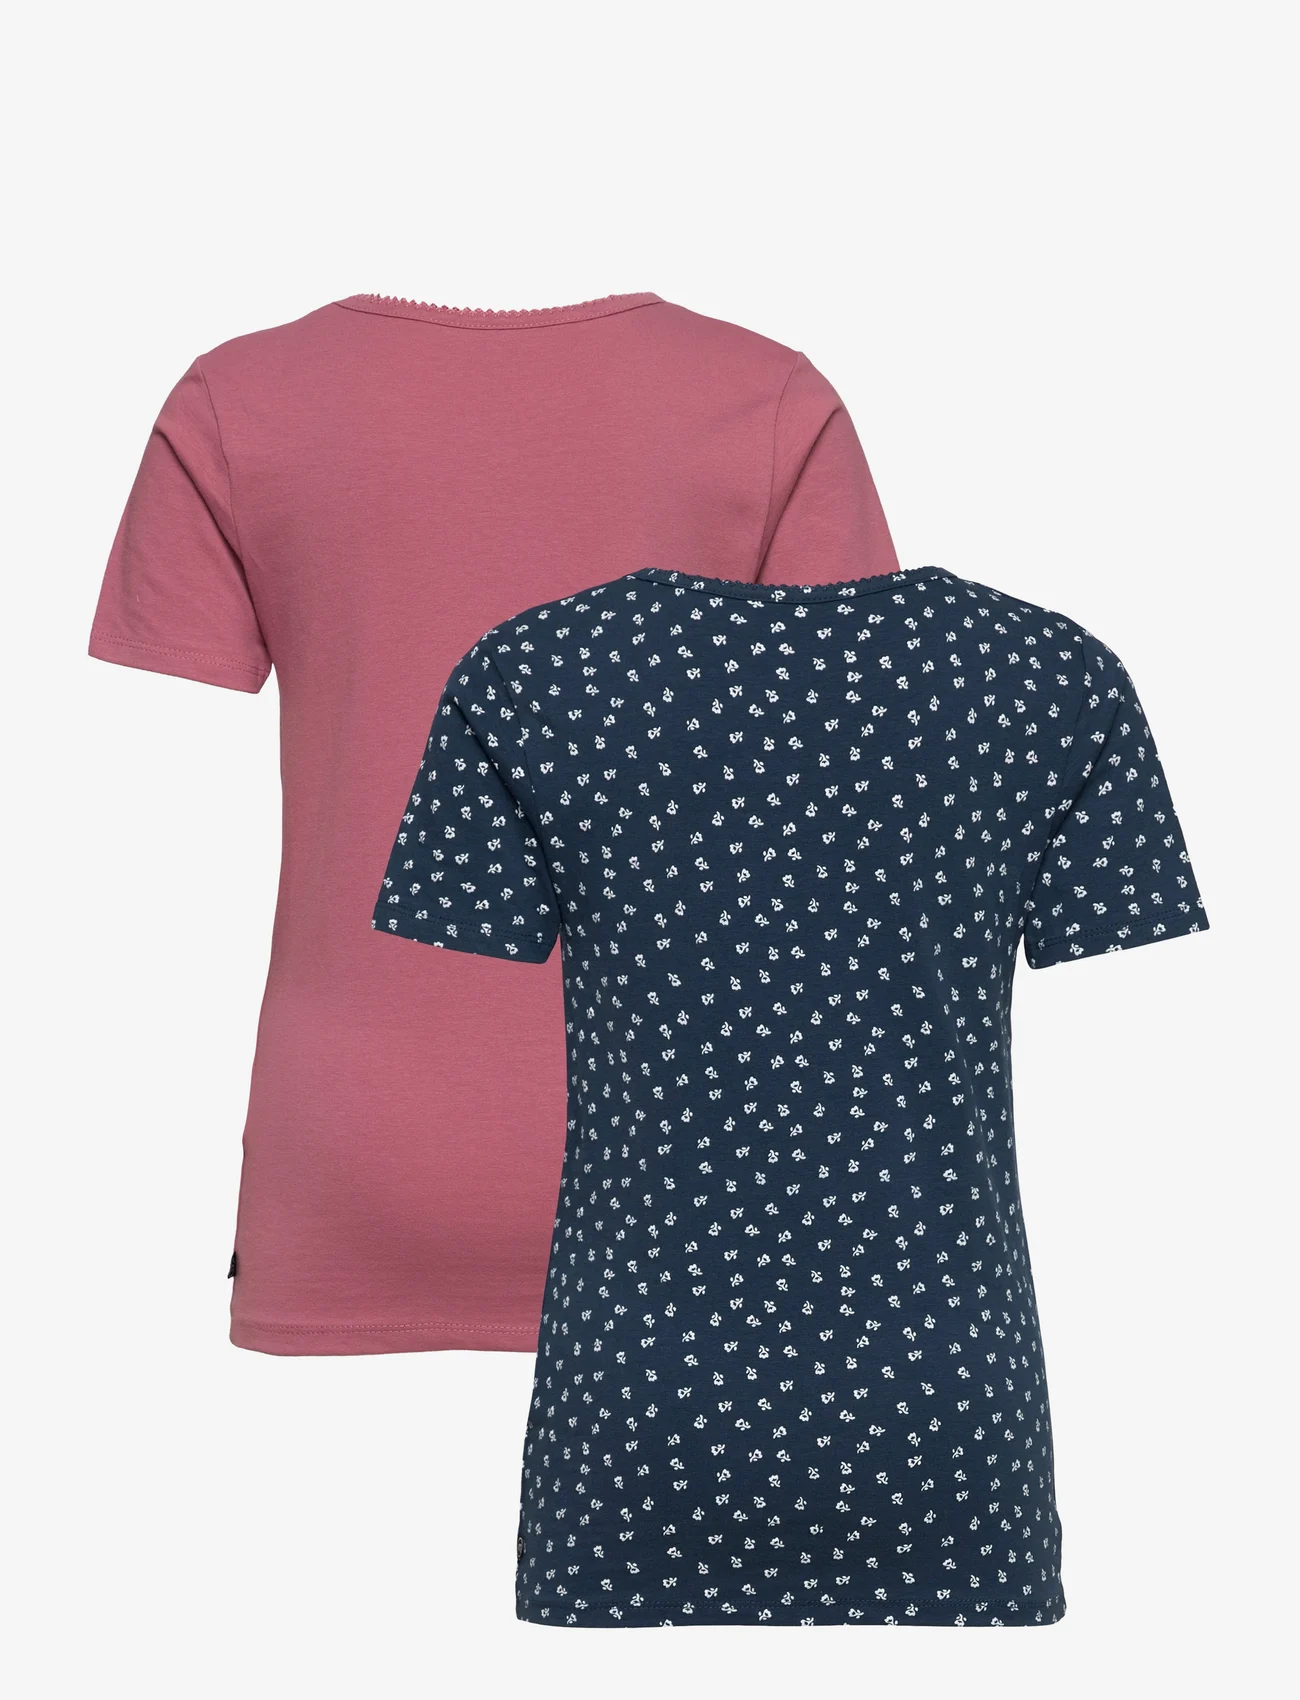 Minymo - Basic 33 -T-shirt SS (2-pack) - korte mouwen - mesa rose - 1